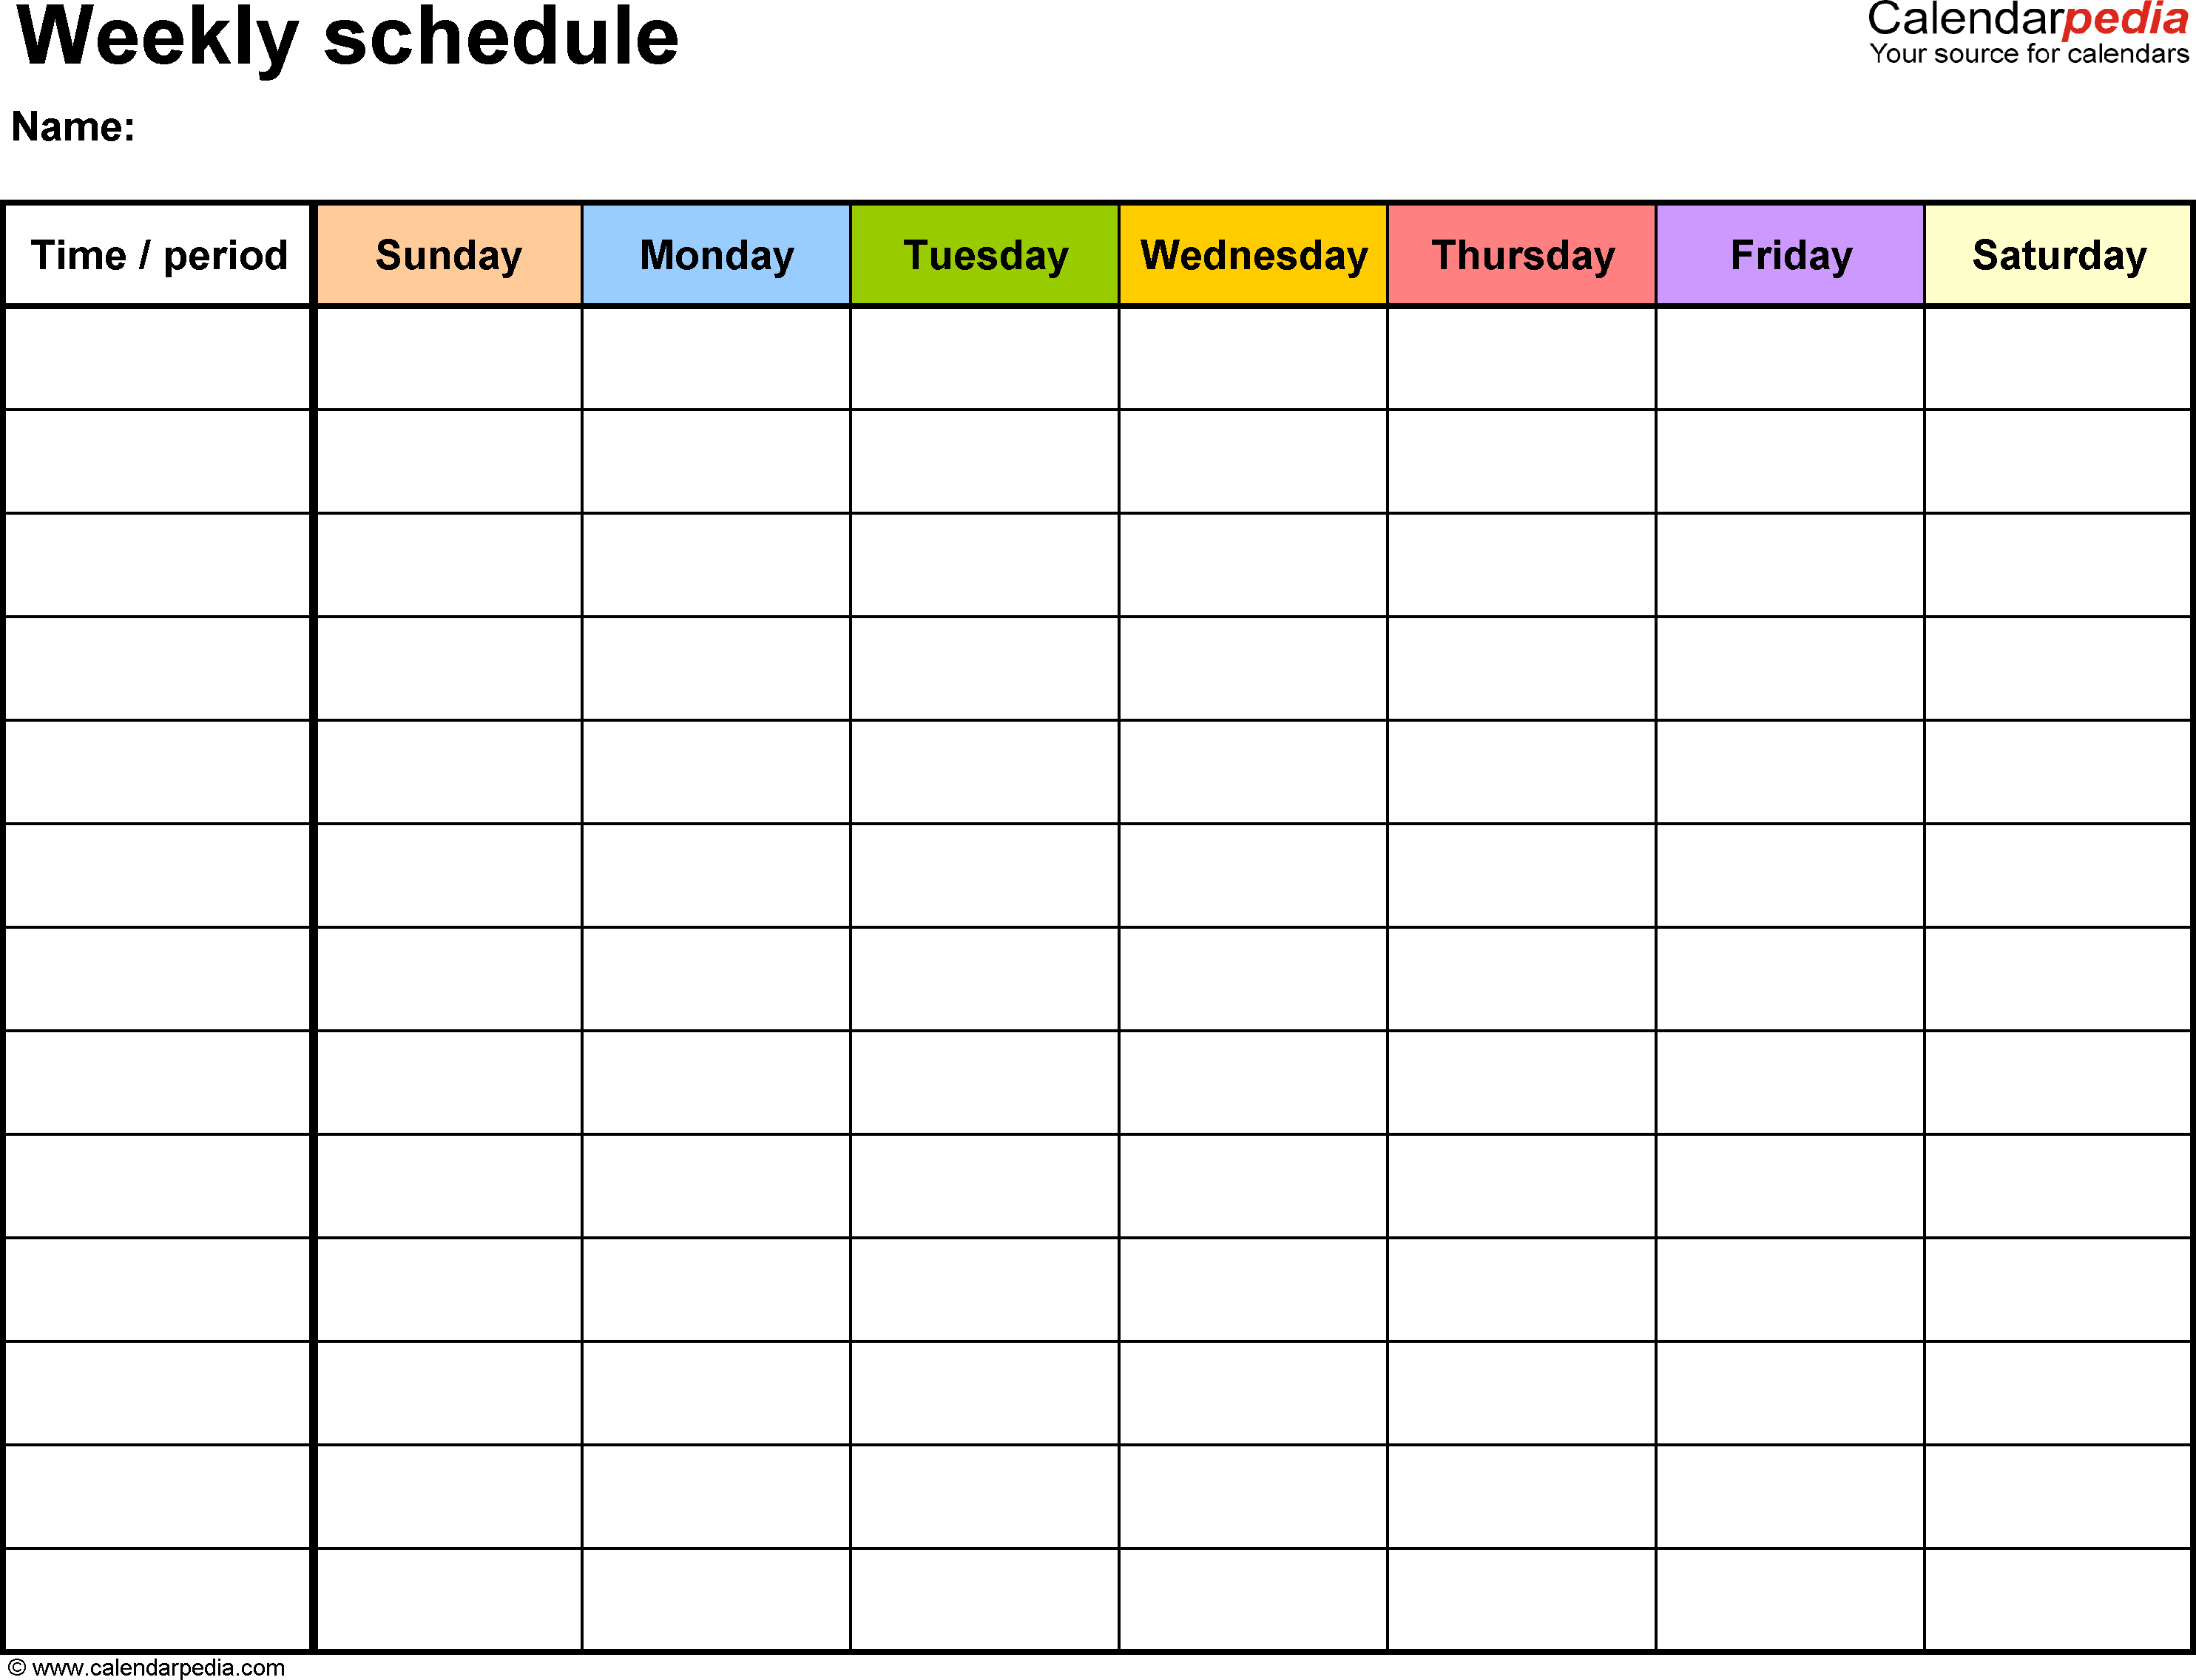 Excel Spreadsheet Schedule Template In Free Weekly Schedule Templates For Excel  18 Templates